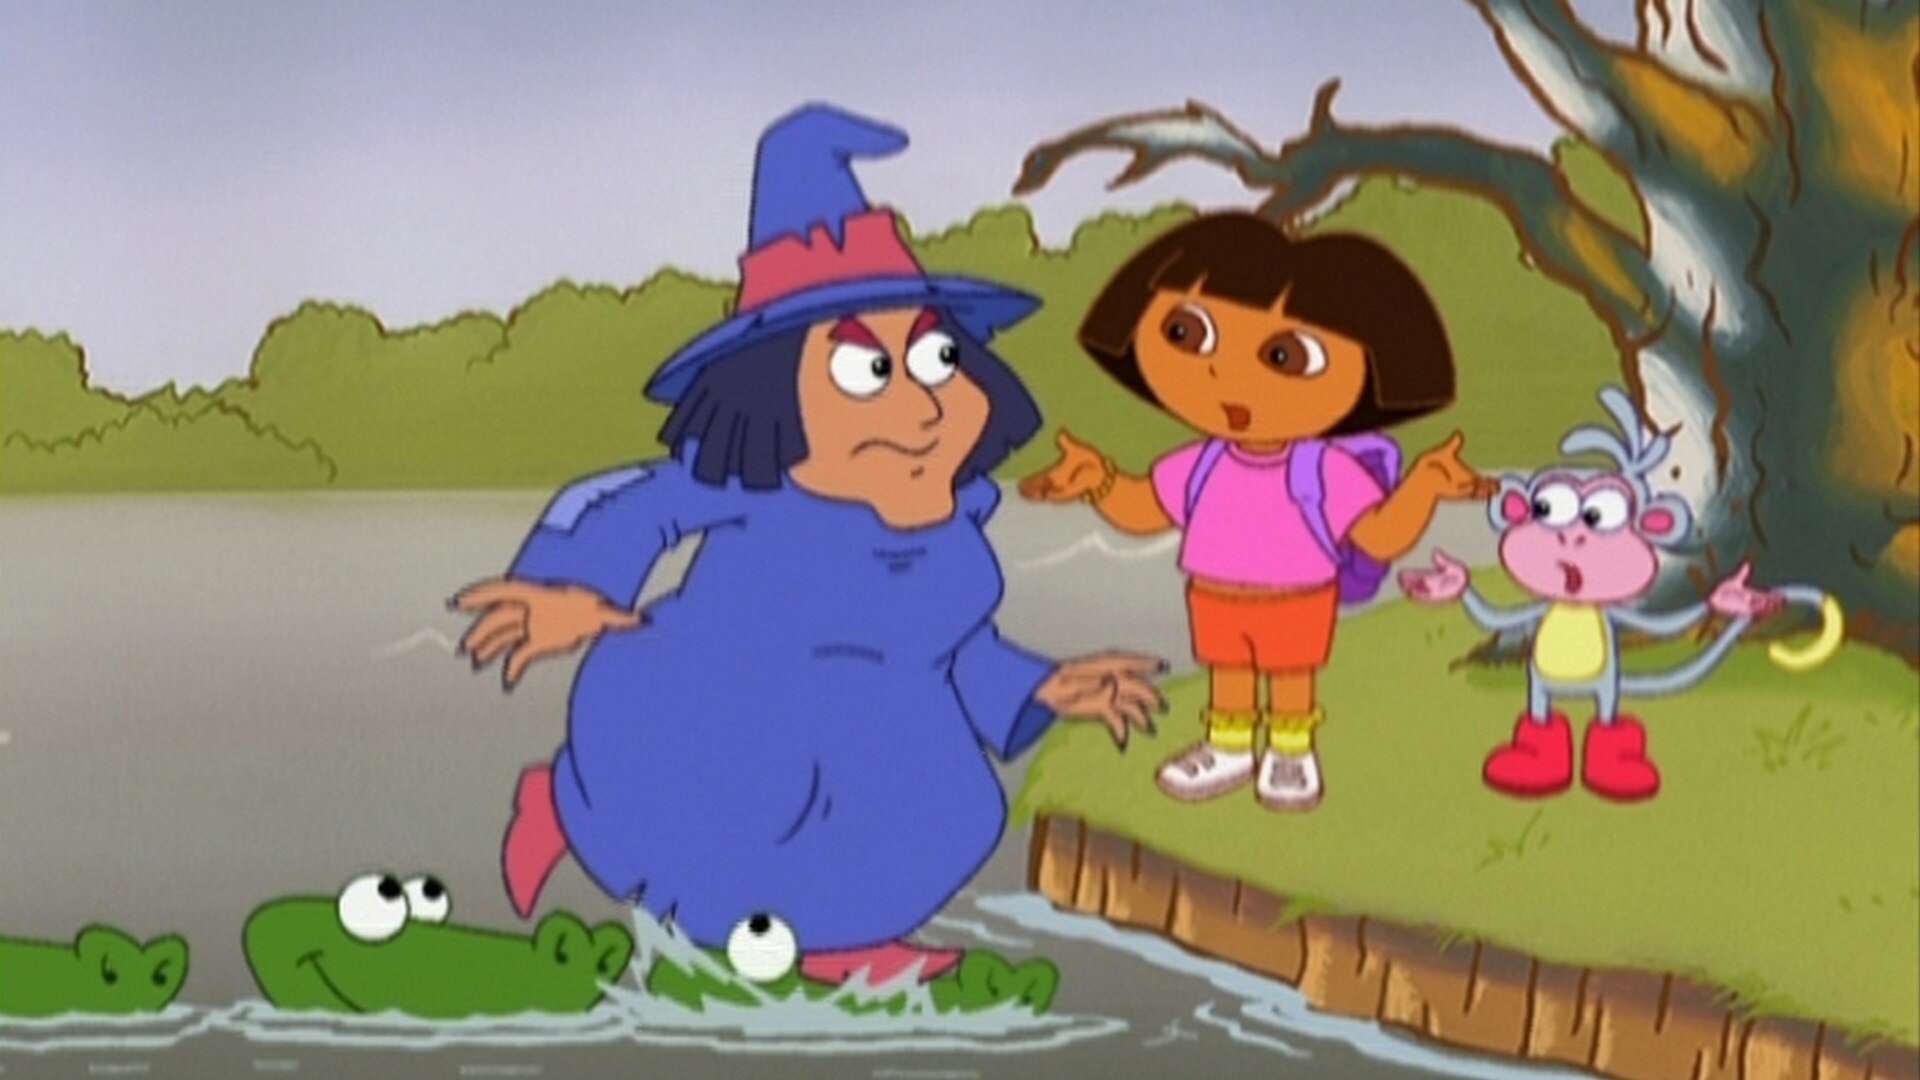 Watch Dora the Explorer Season 1 Episode 20 Online - Stream Full Episodes